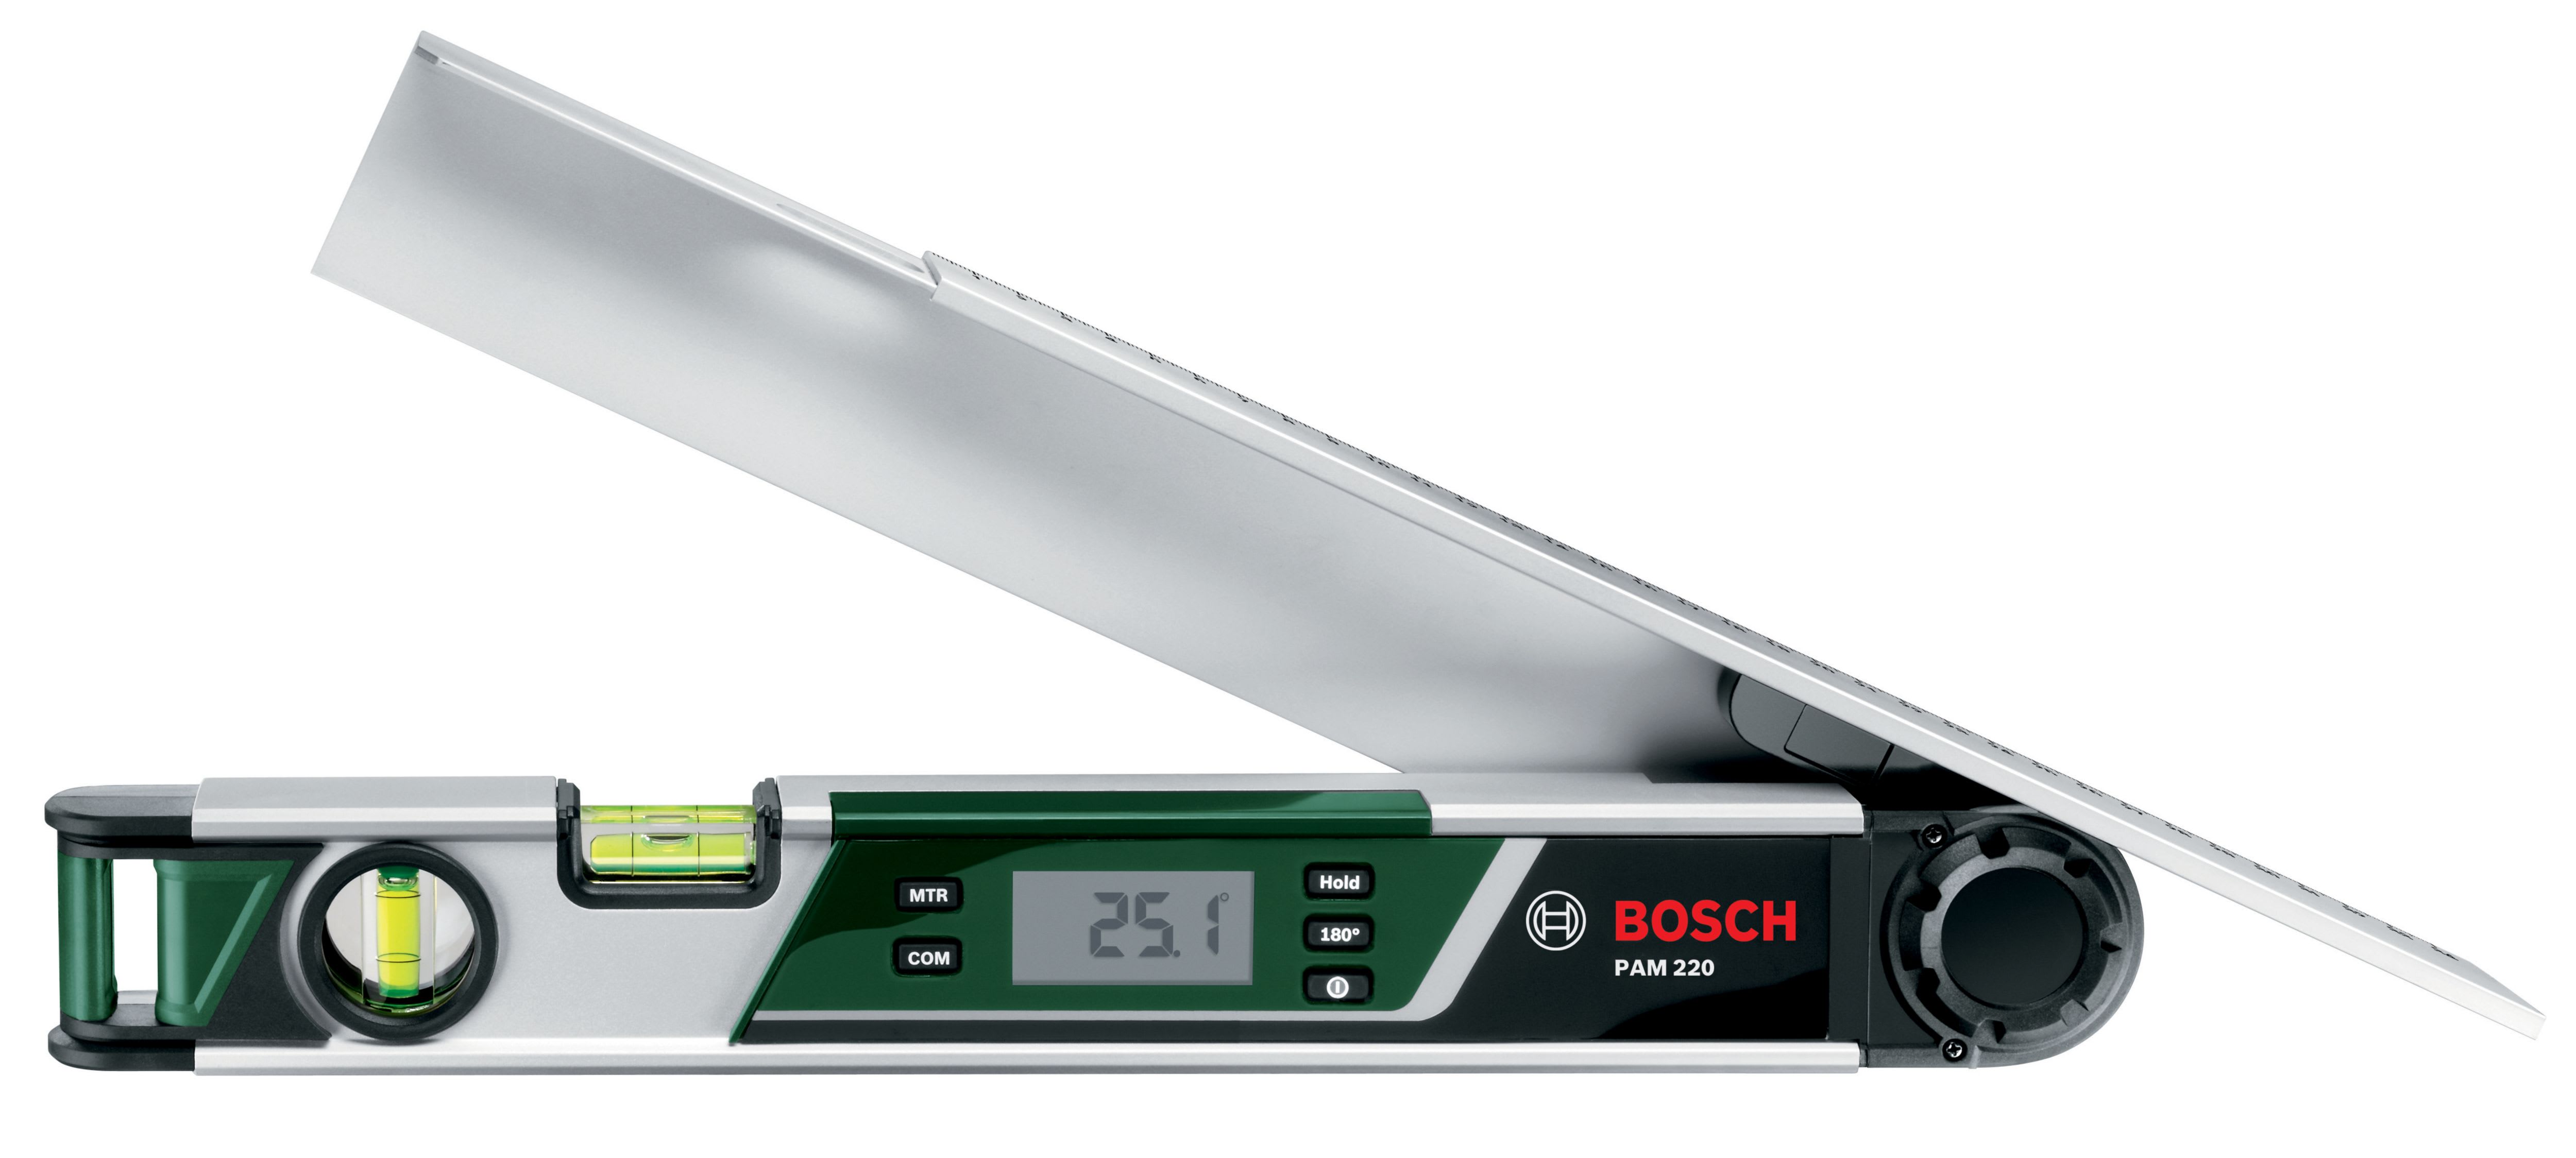 Bosch Pam 220 Digital Angle Measure